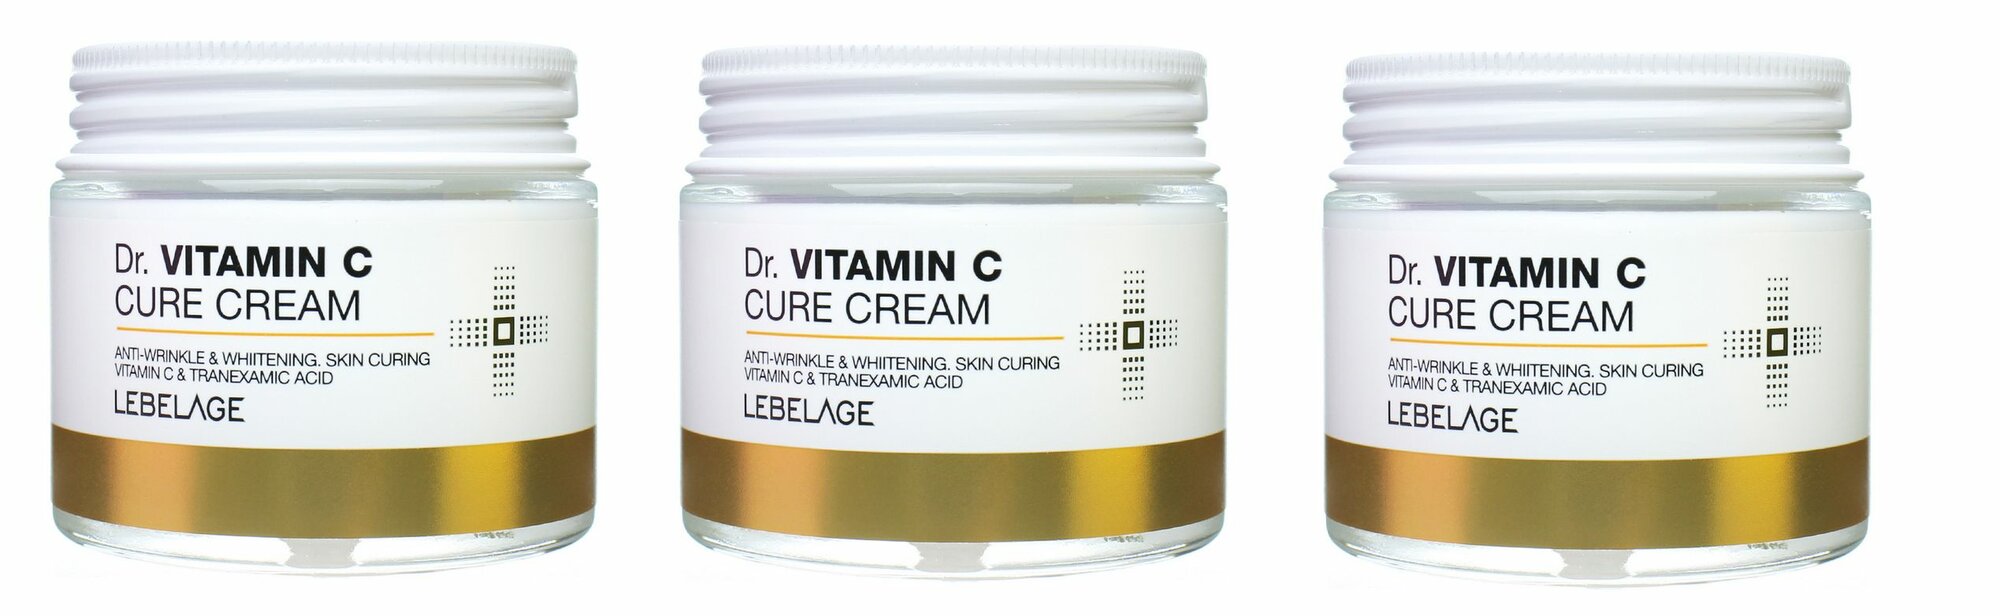 LEBELAGE Крем для лица осветляющий с витамином С Dr. Vitamin C Cure Cream, 70 мл - 3 штуки